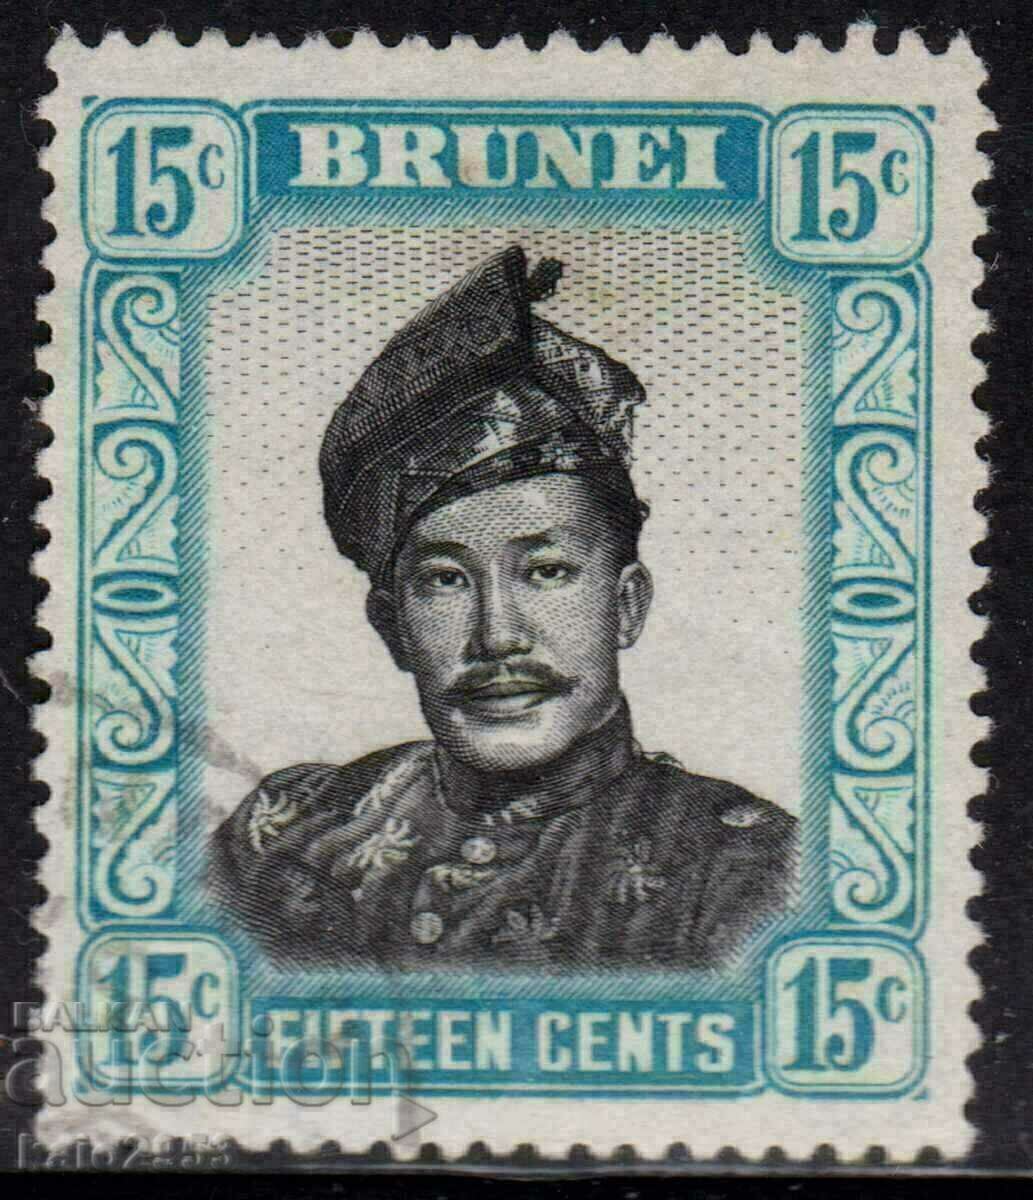 GB/Brunei-Protectorate-1952-Sultan Omar, γραμματόσημο